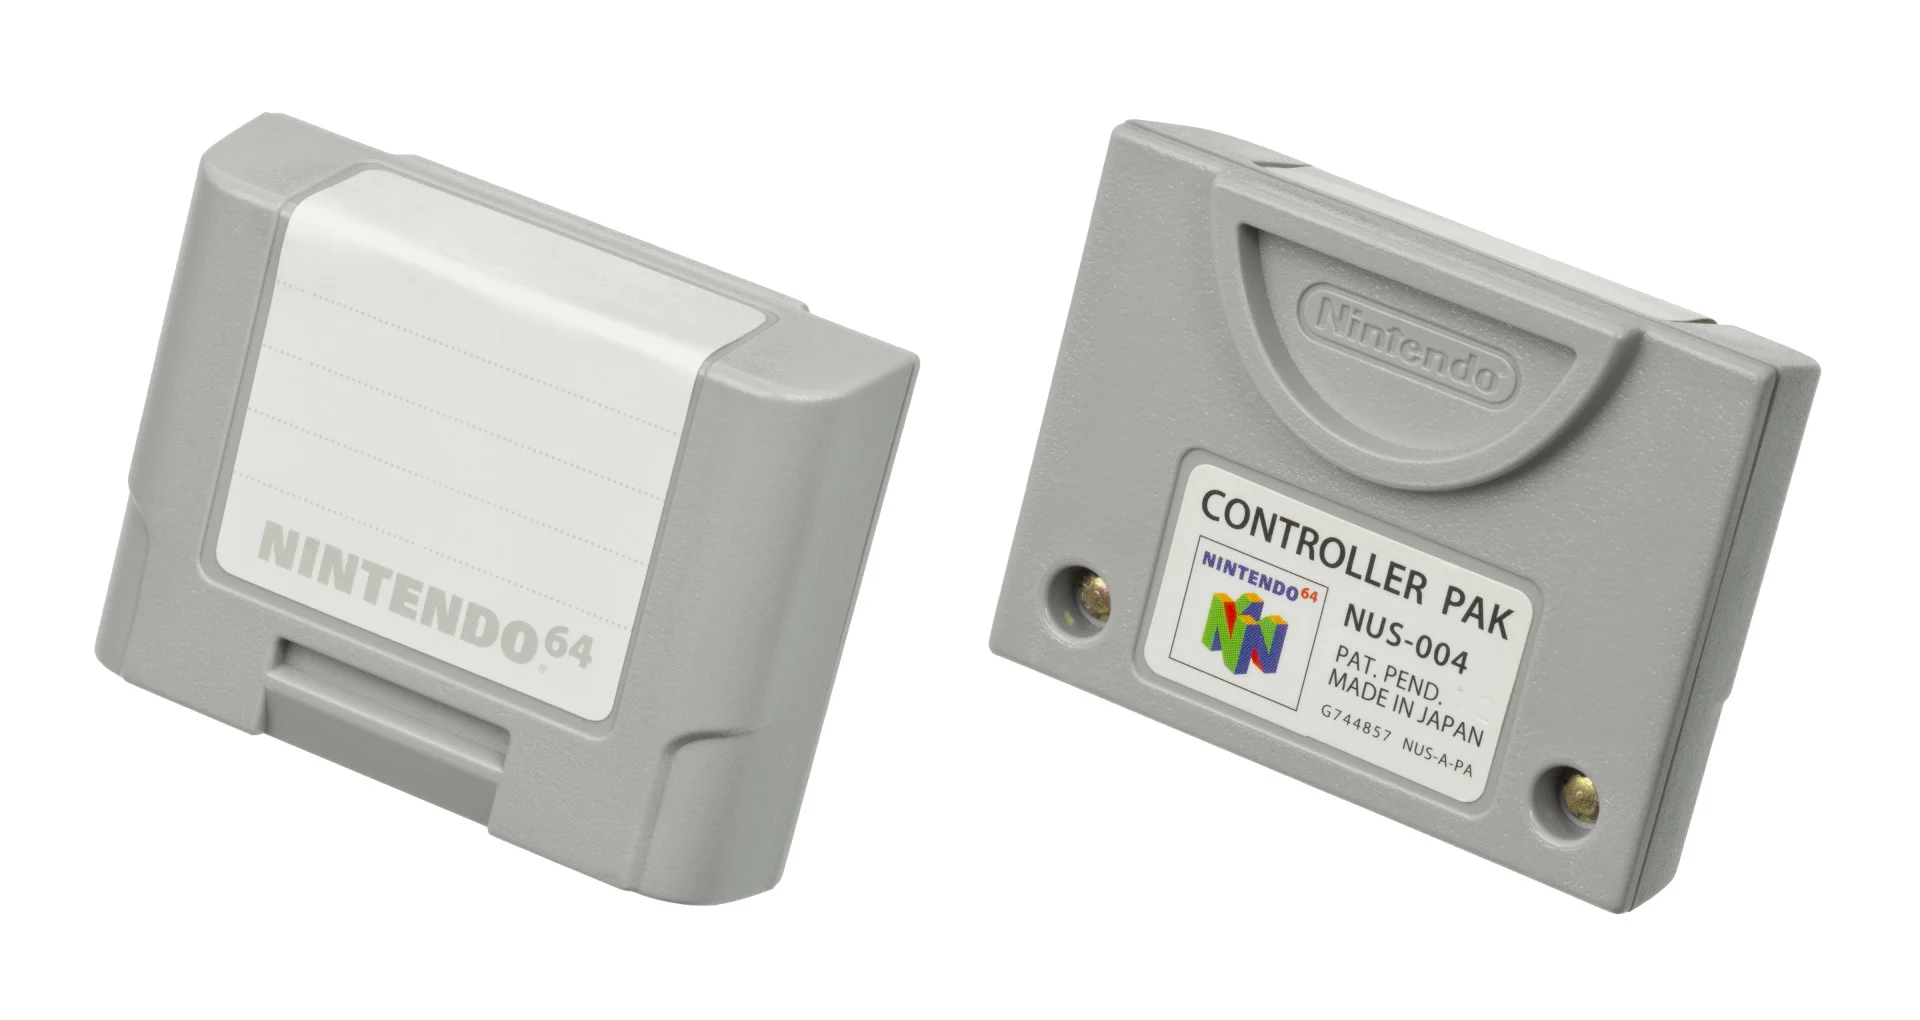  Nintendo 64 Controller Pak [JP]